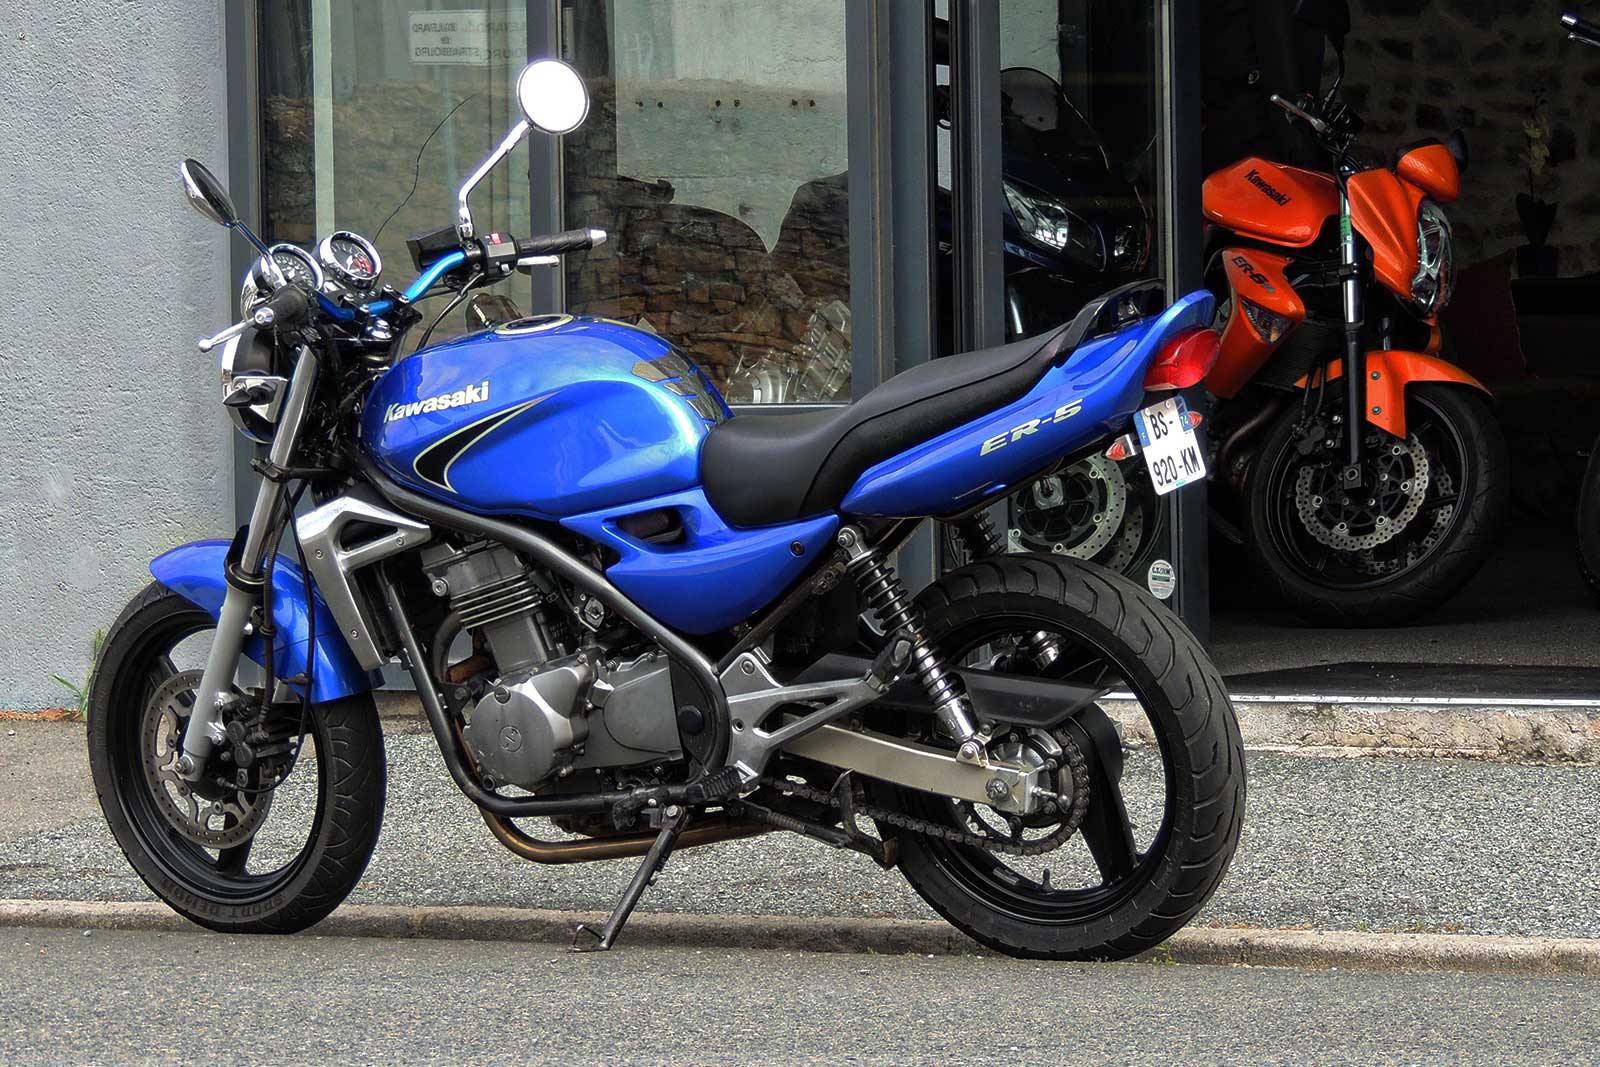 Suzuki gs500: review, history, specs - bikeswiki.com, japanese motorcycle encyclopedia